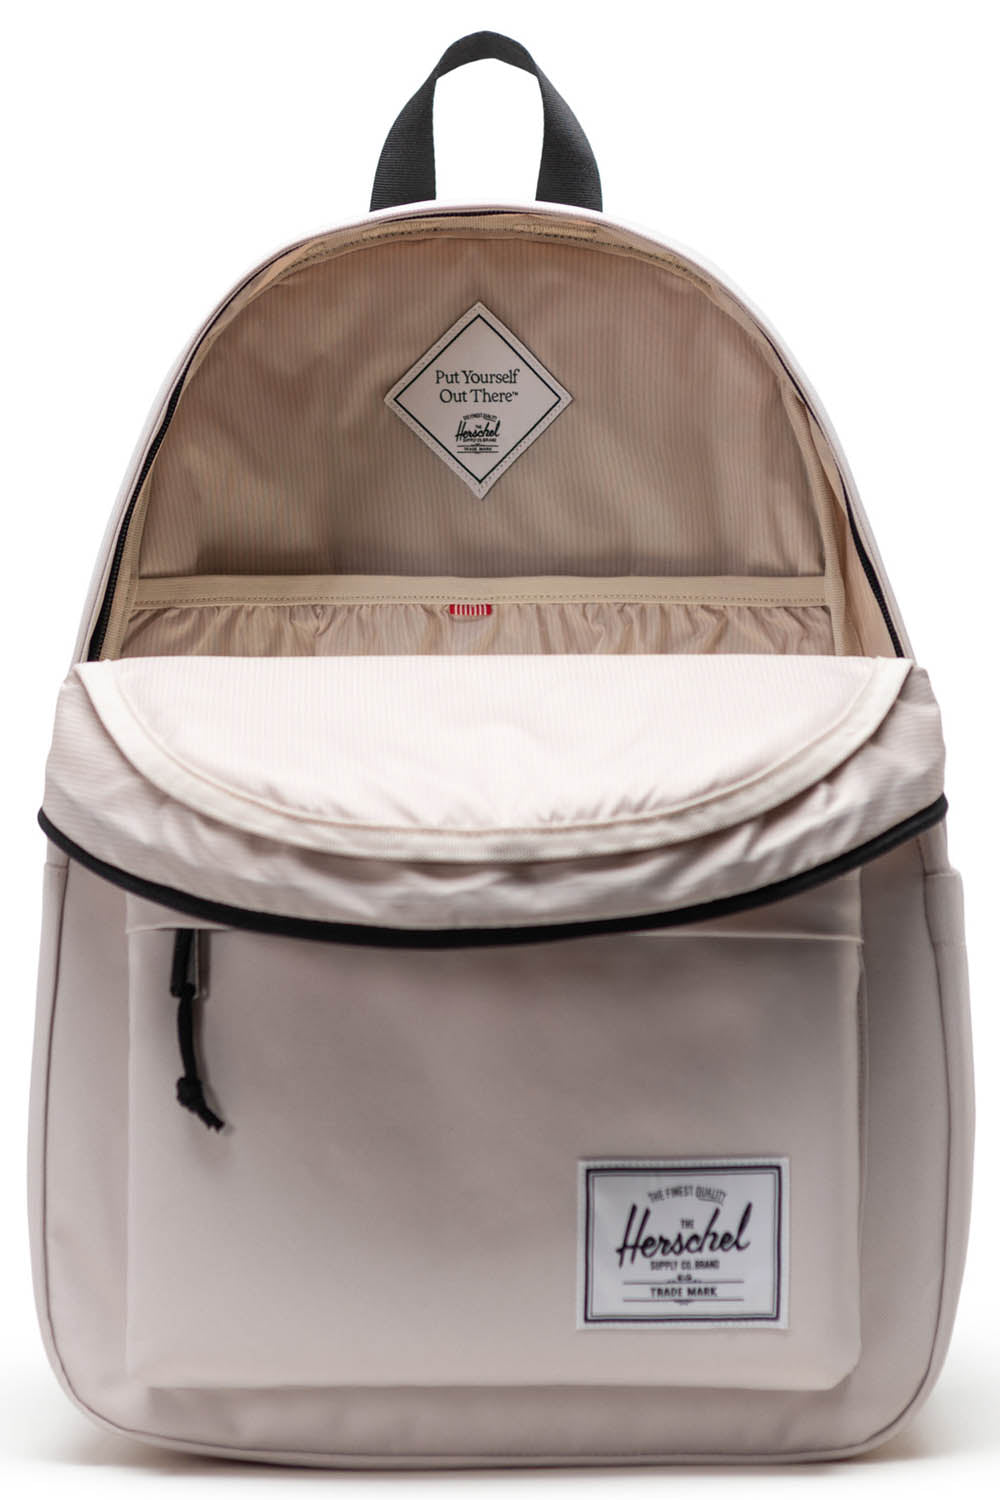 Herschel Classic X-Large Backpack - Moonbeam